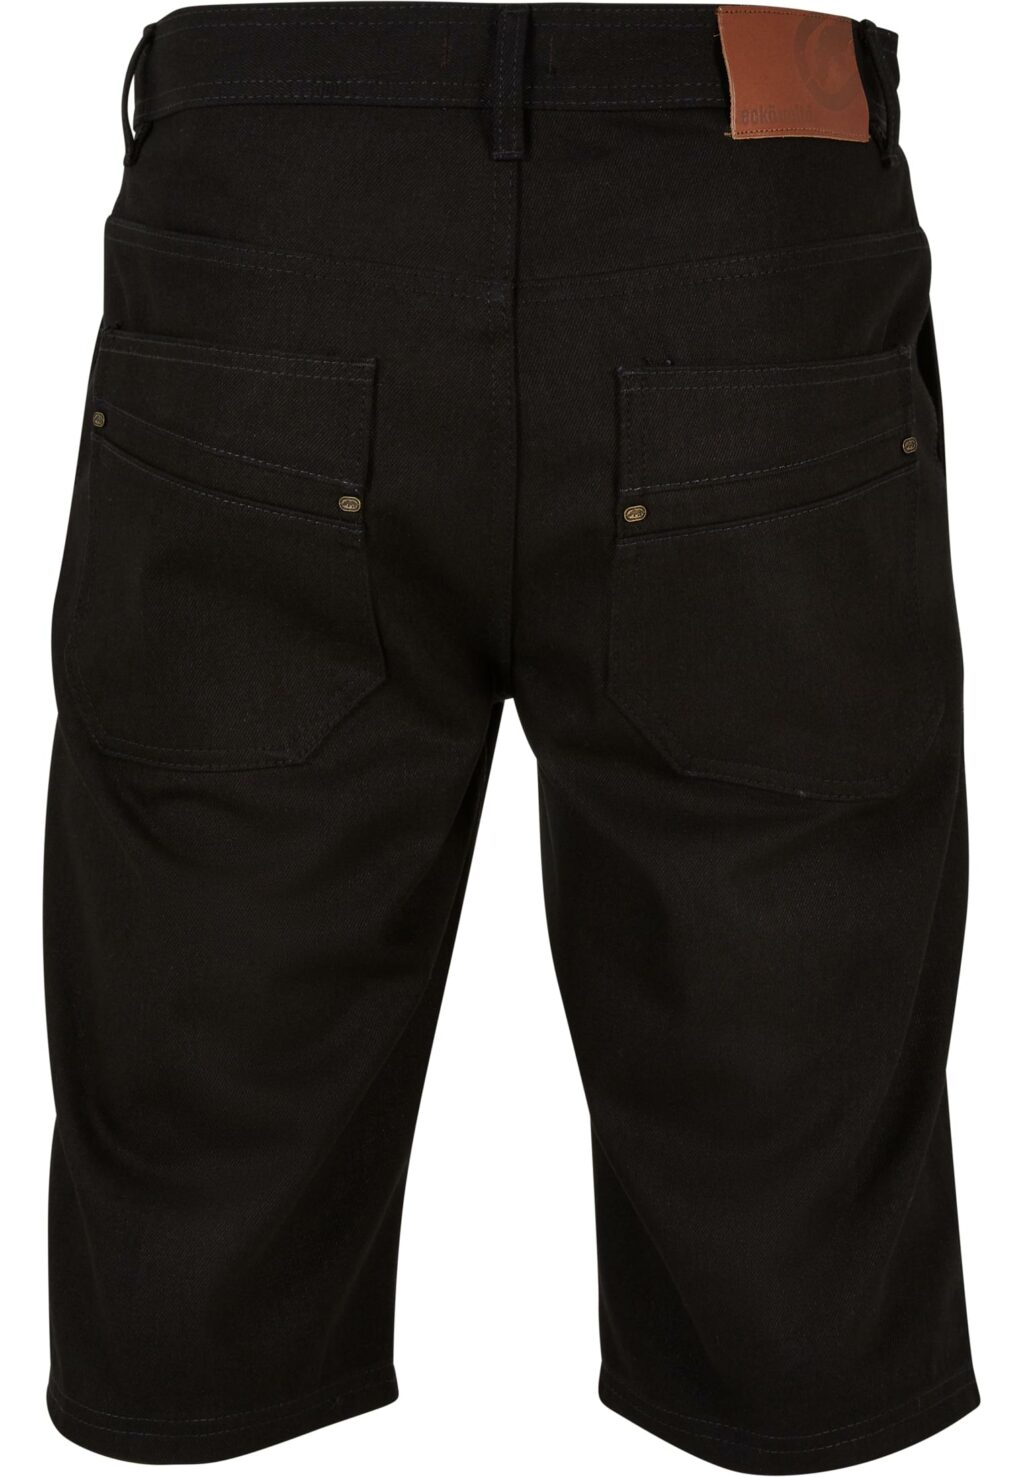 Glenwood Jeans Short OD black ECKOSH1020